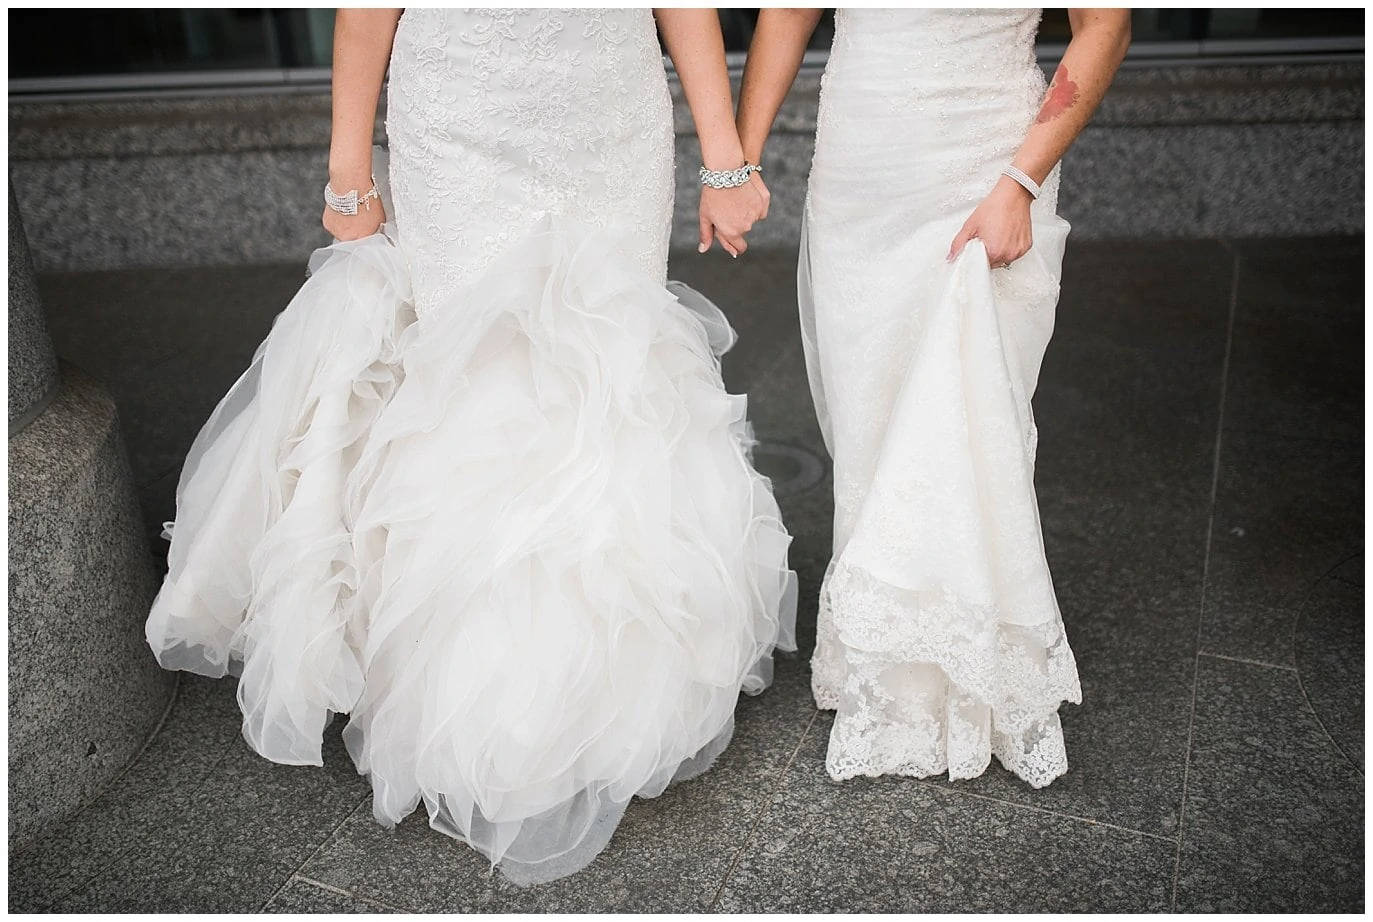 brides in wedding dresses photo